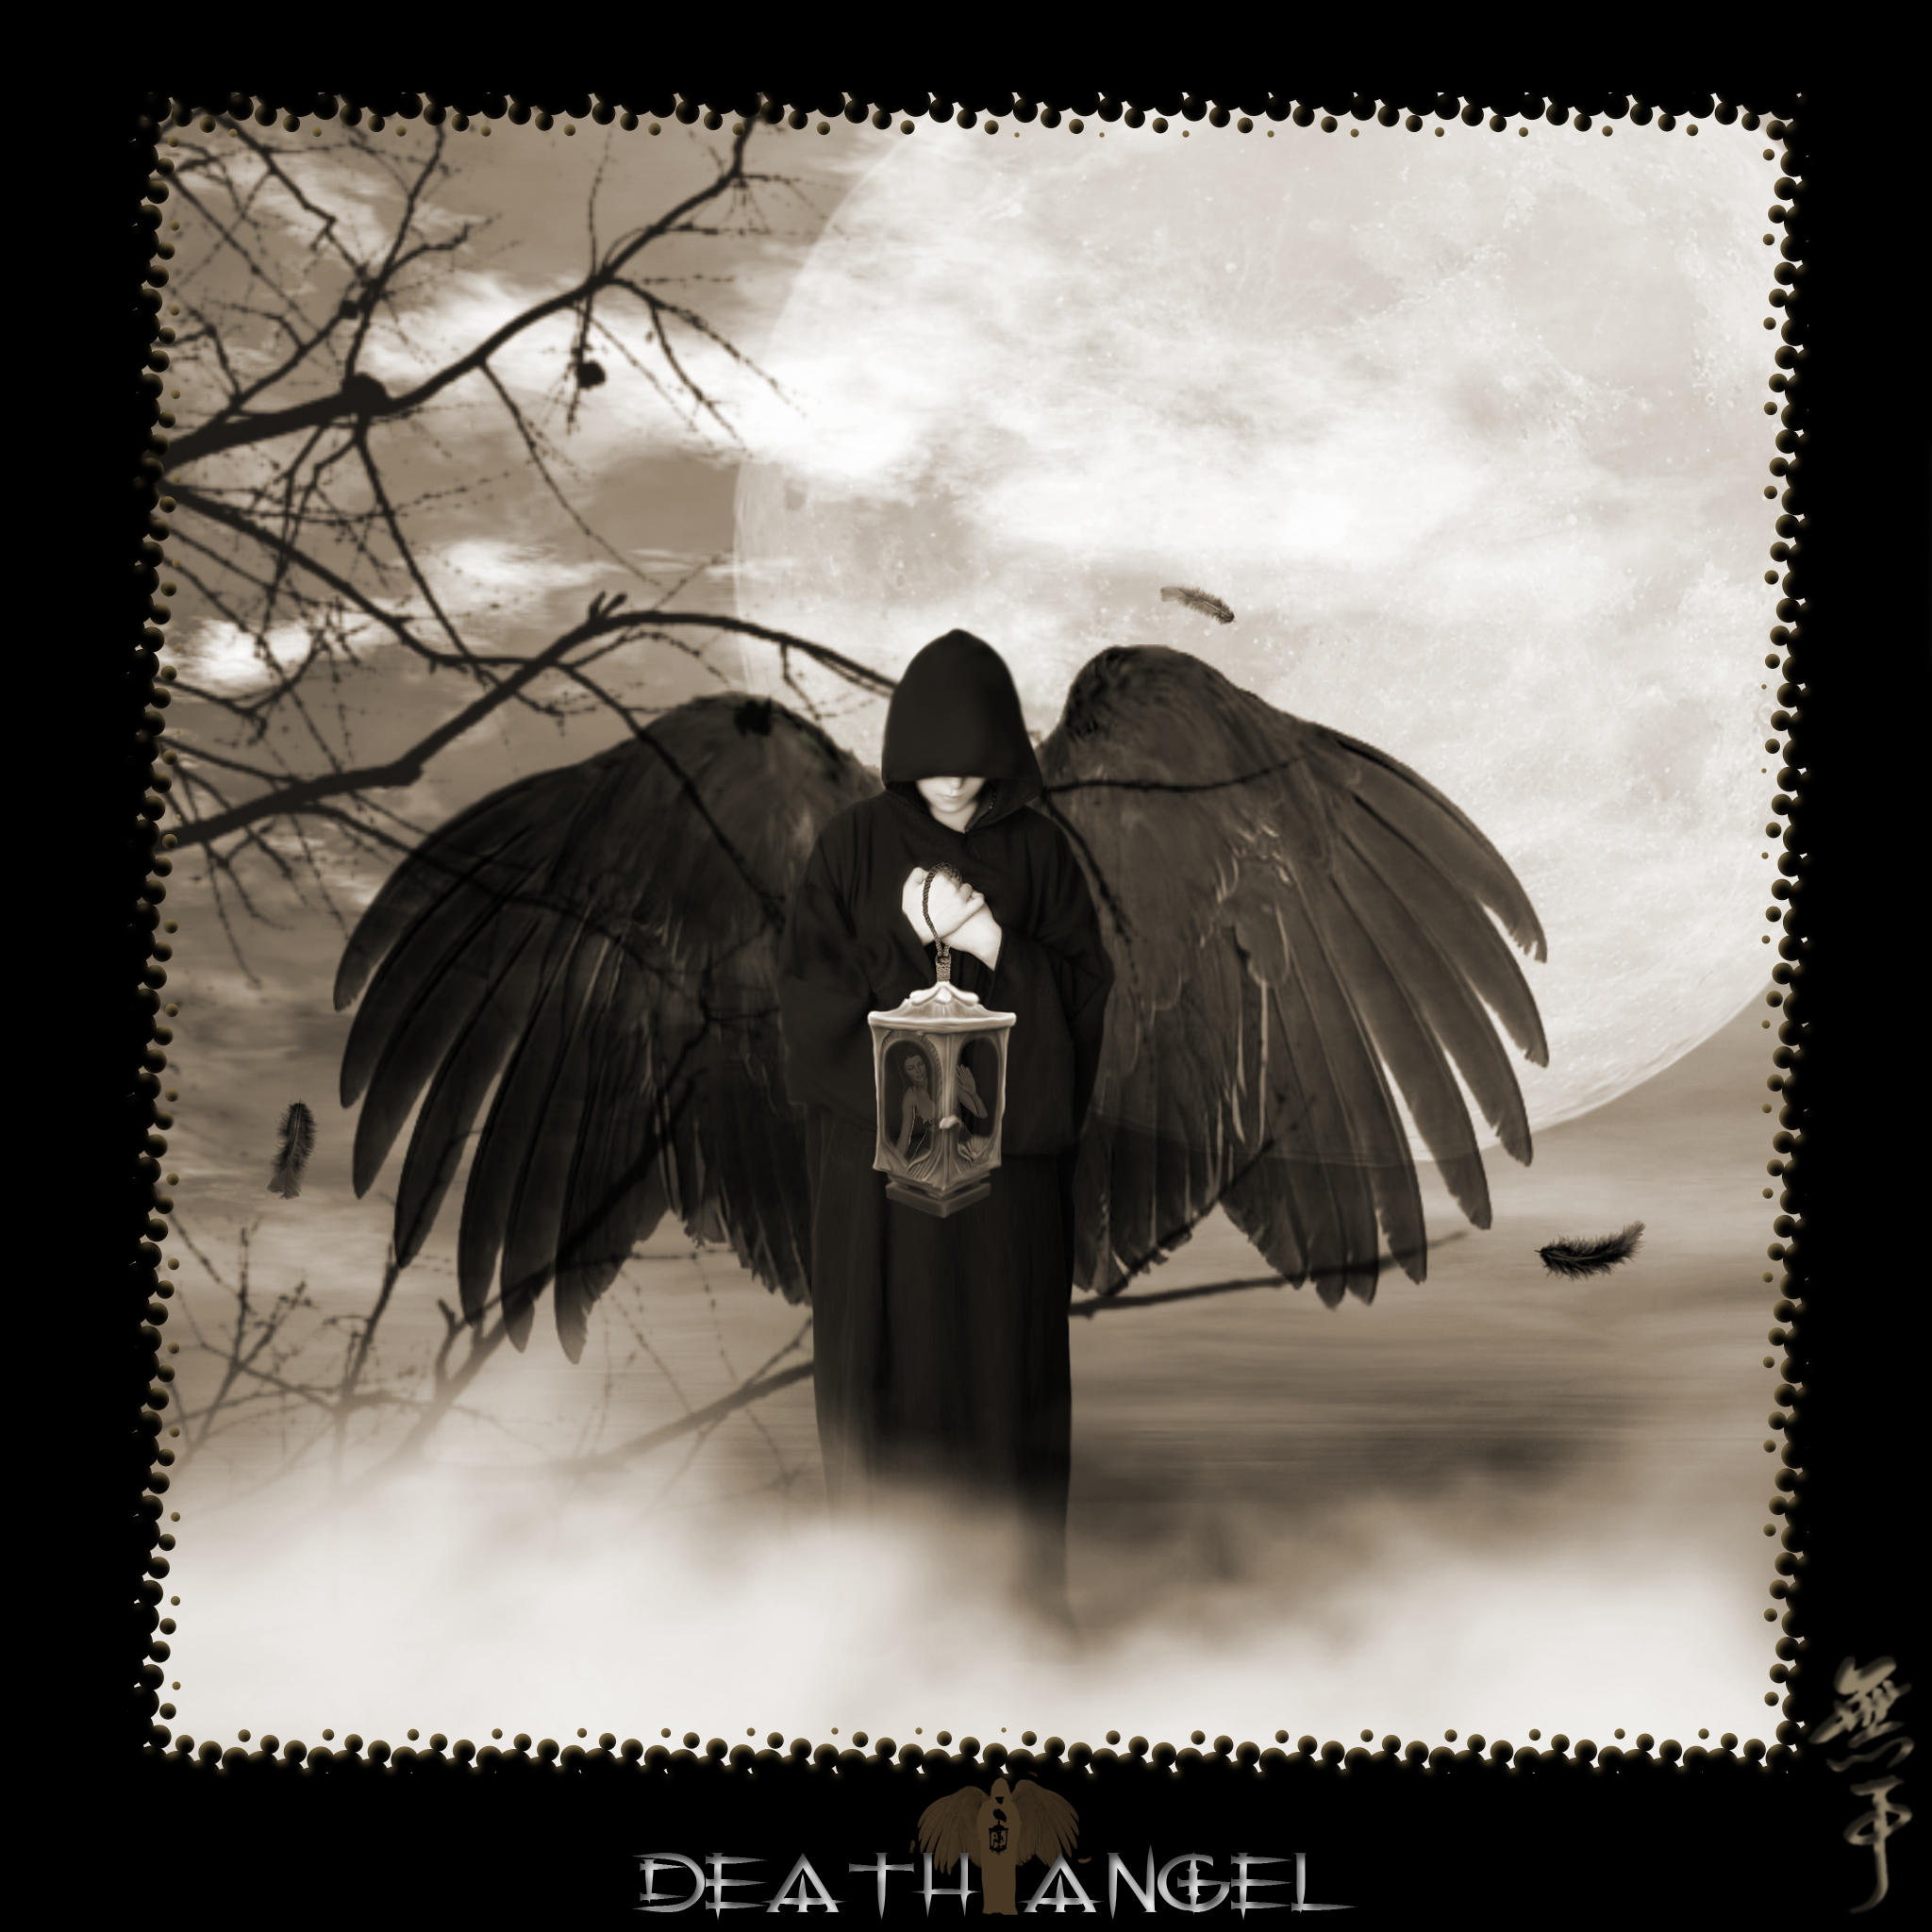 Death Angel by JaquelineMoreno